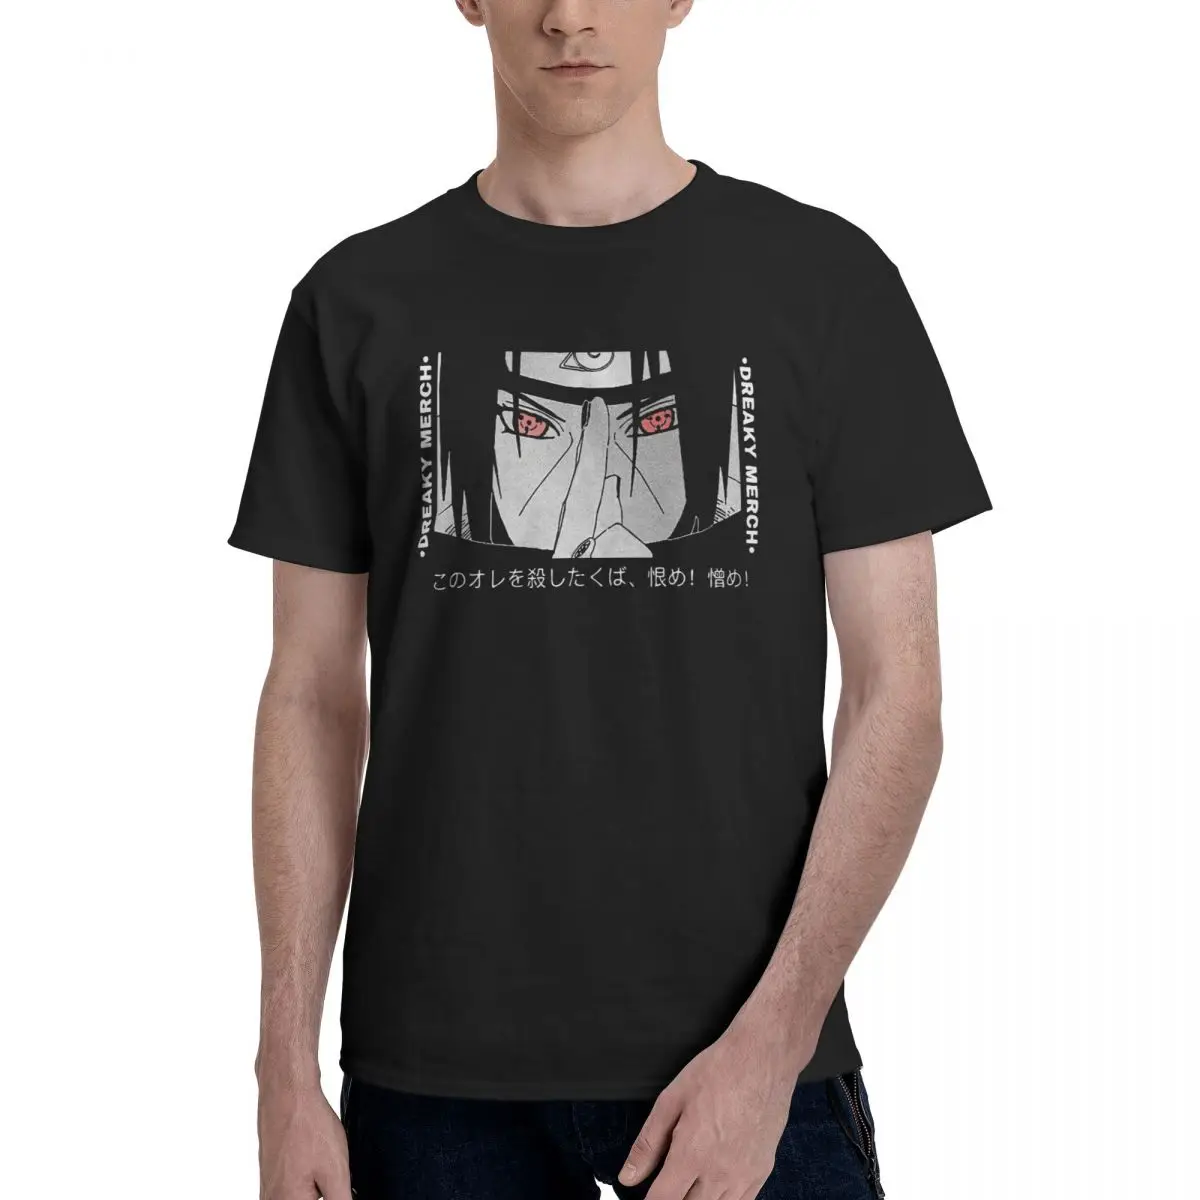 Itachi Uchica Bandai Naruto T Shirt for Men 100% Cotton Unique T-Shirts Round Collar Tees Short Sleeve Clothes Gift Idea